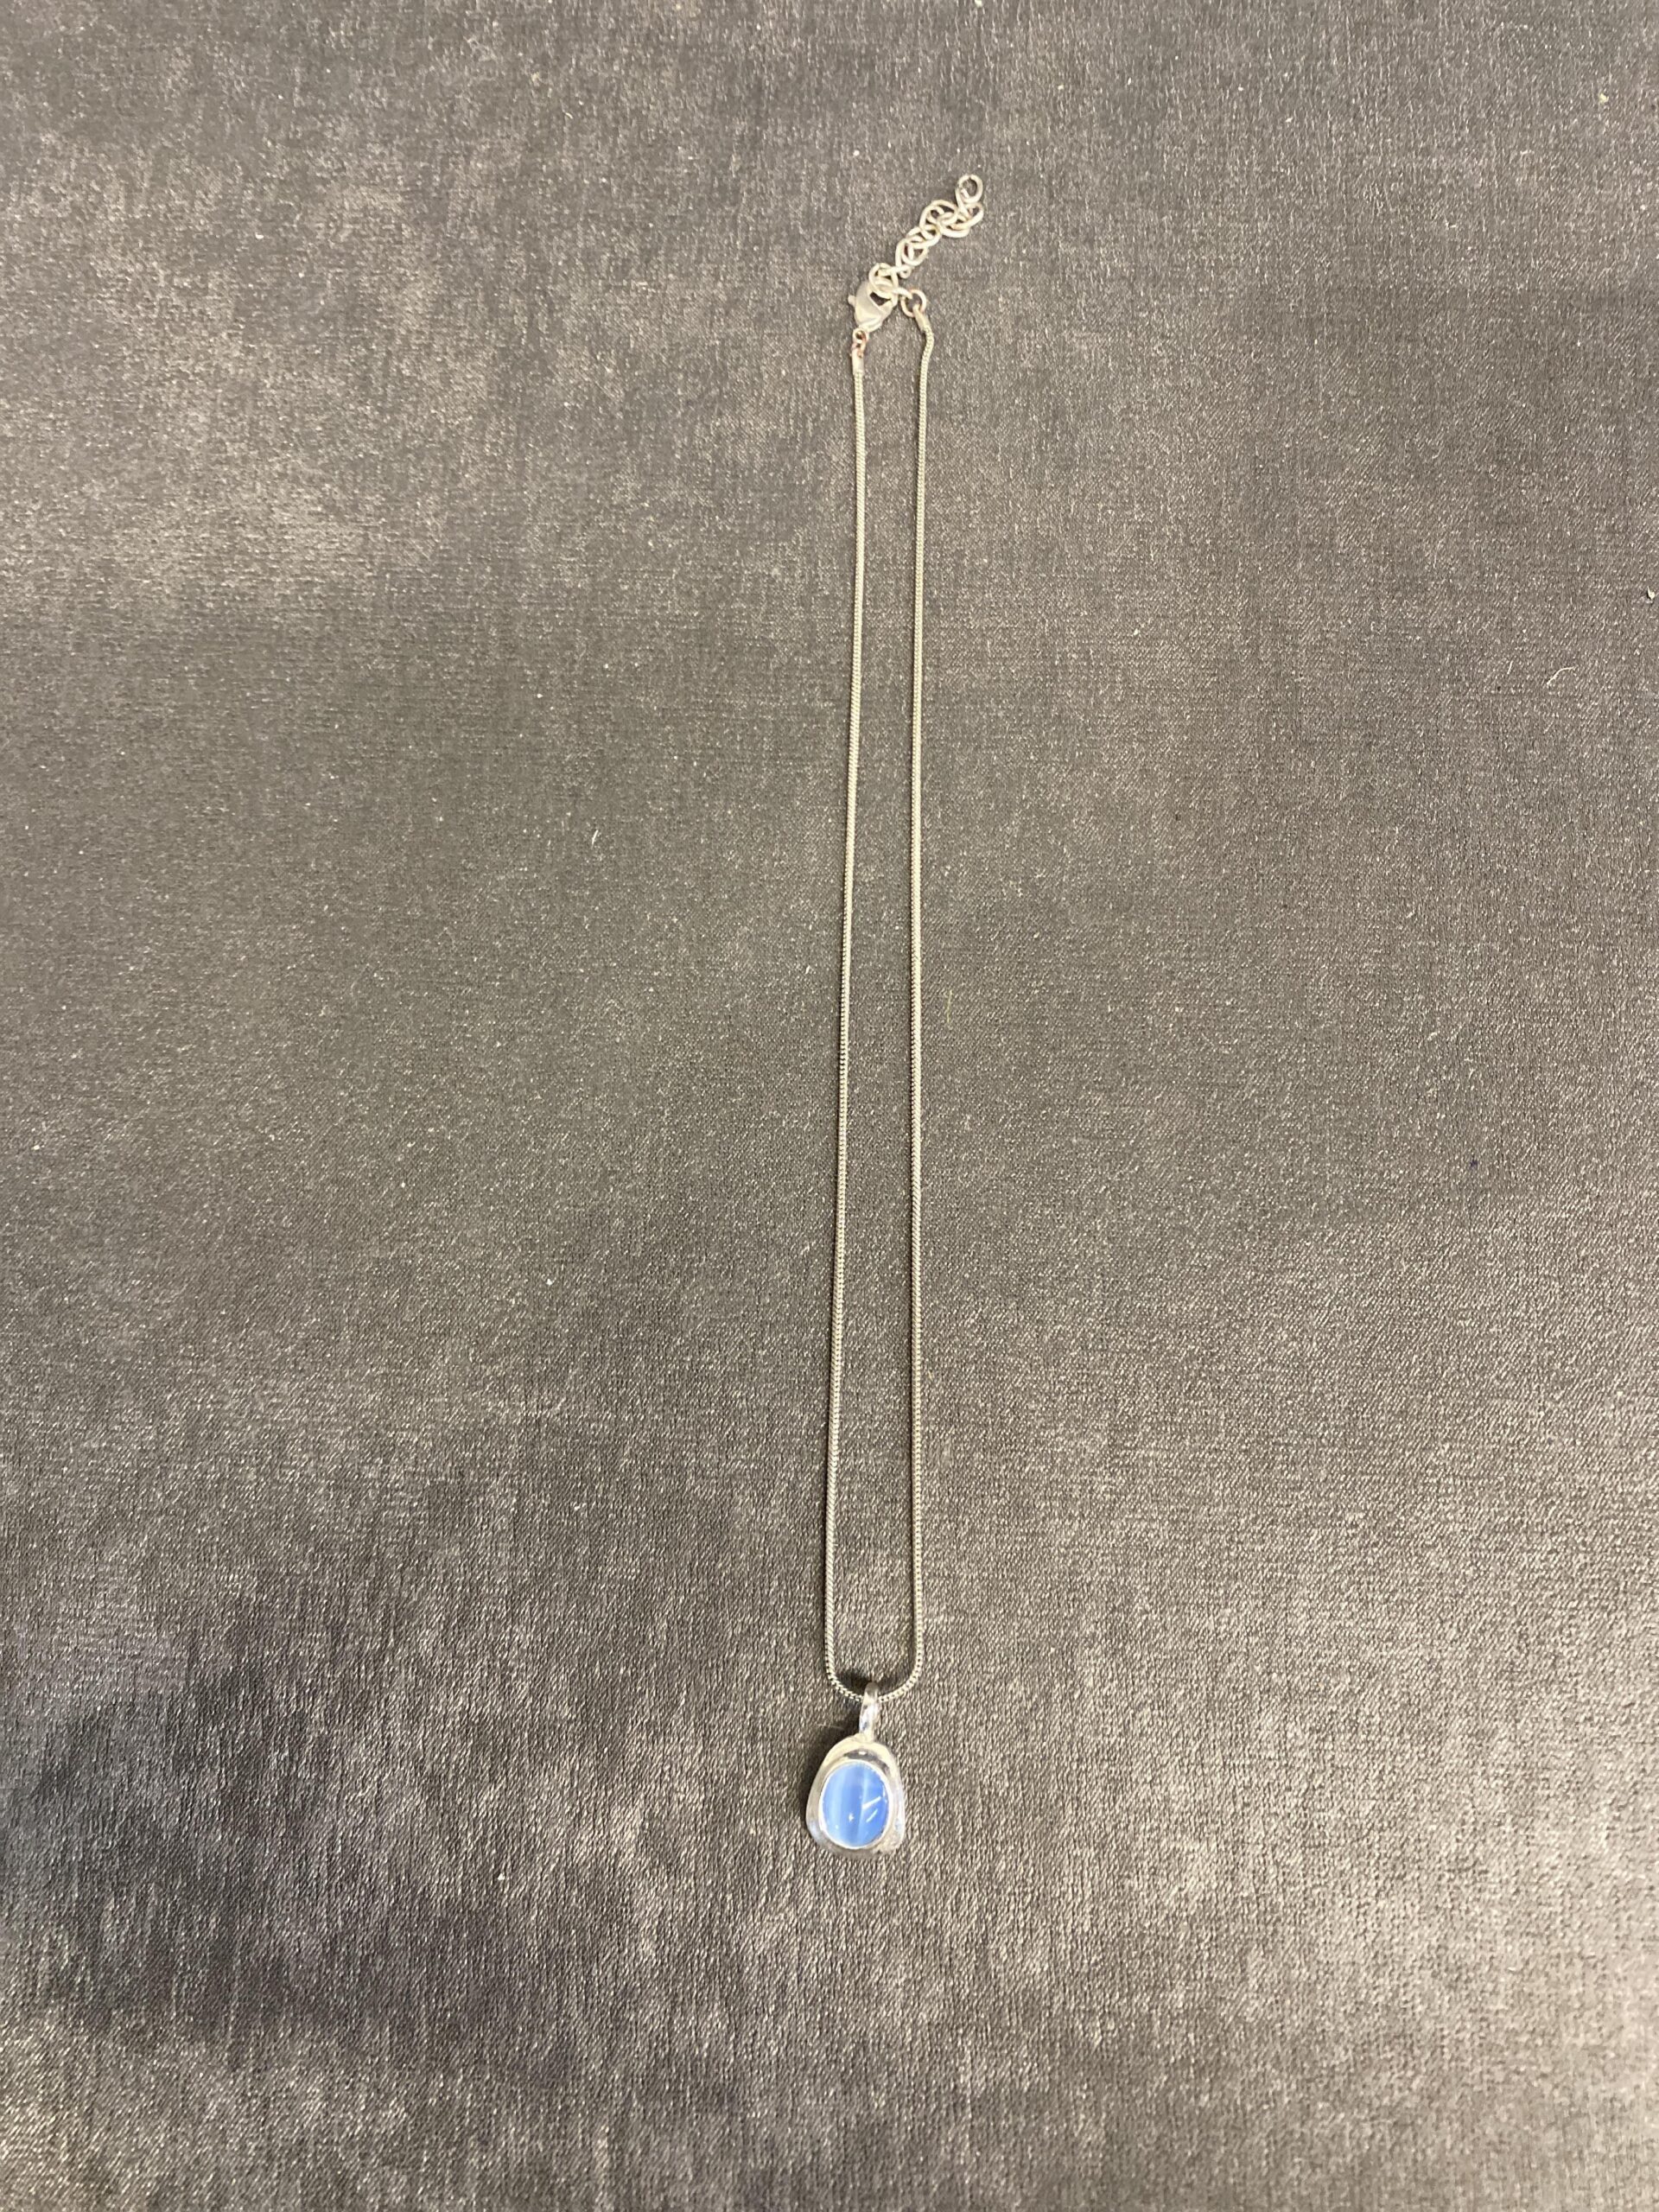 Necklace – Blue Stone